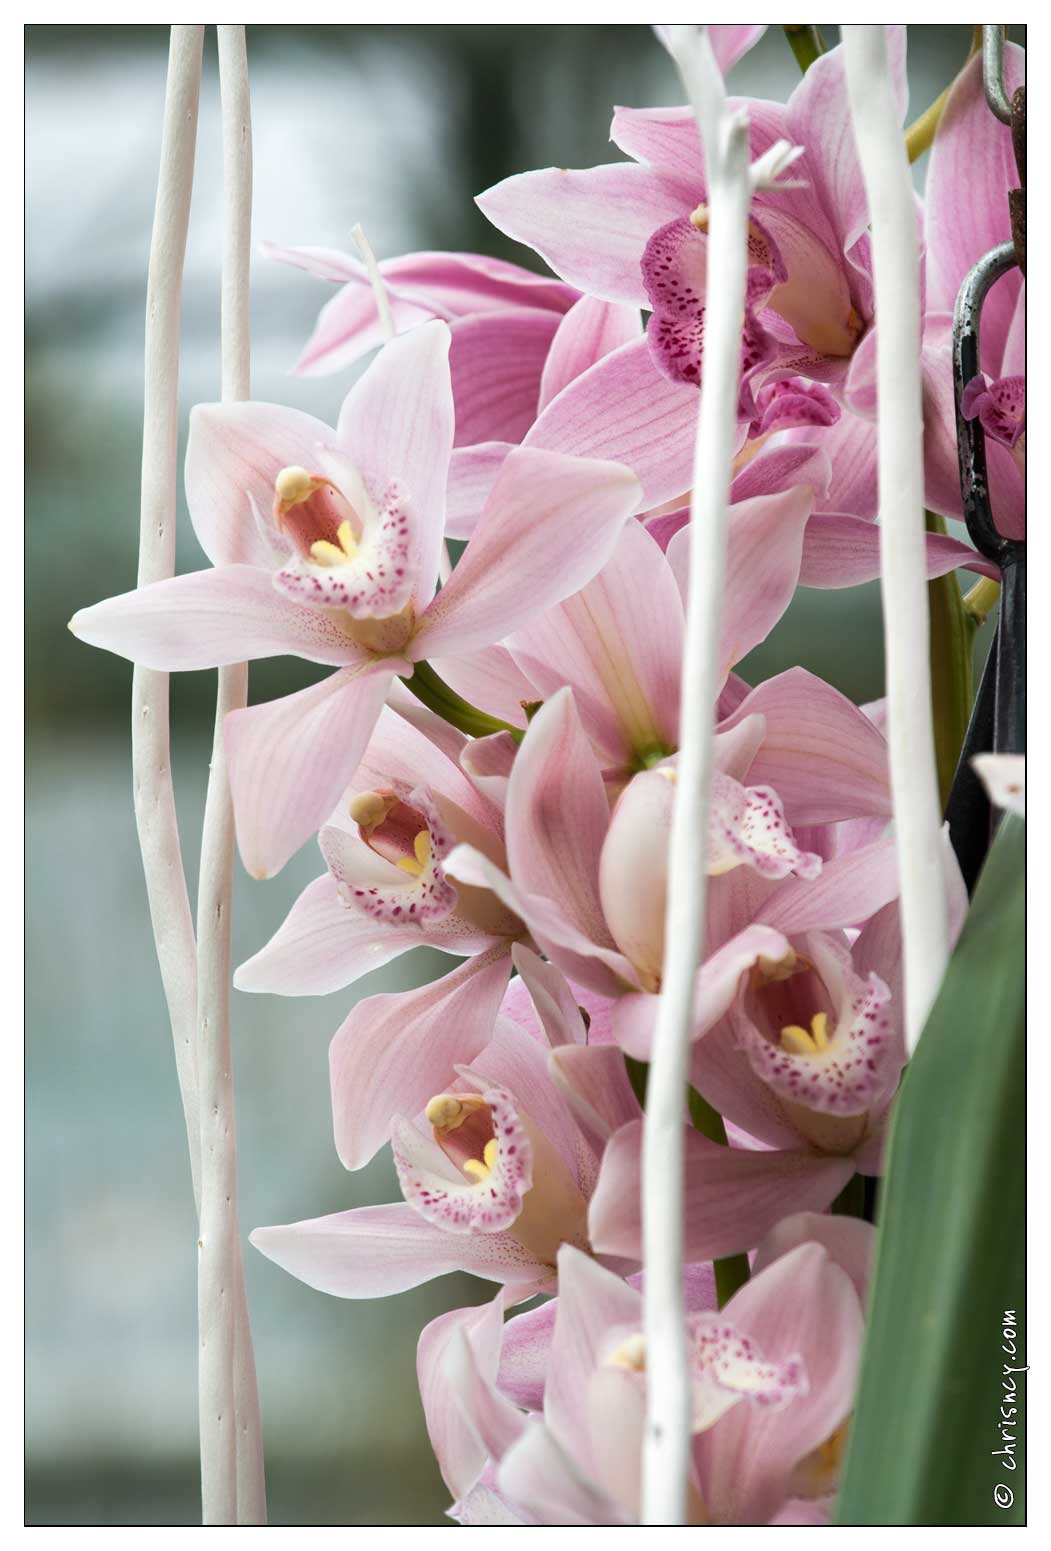 20090407-2235-Orchidee.jpg